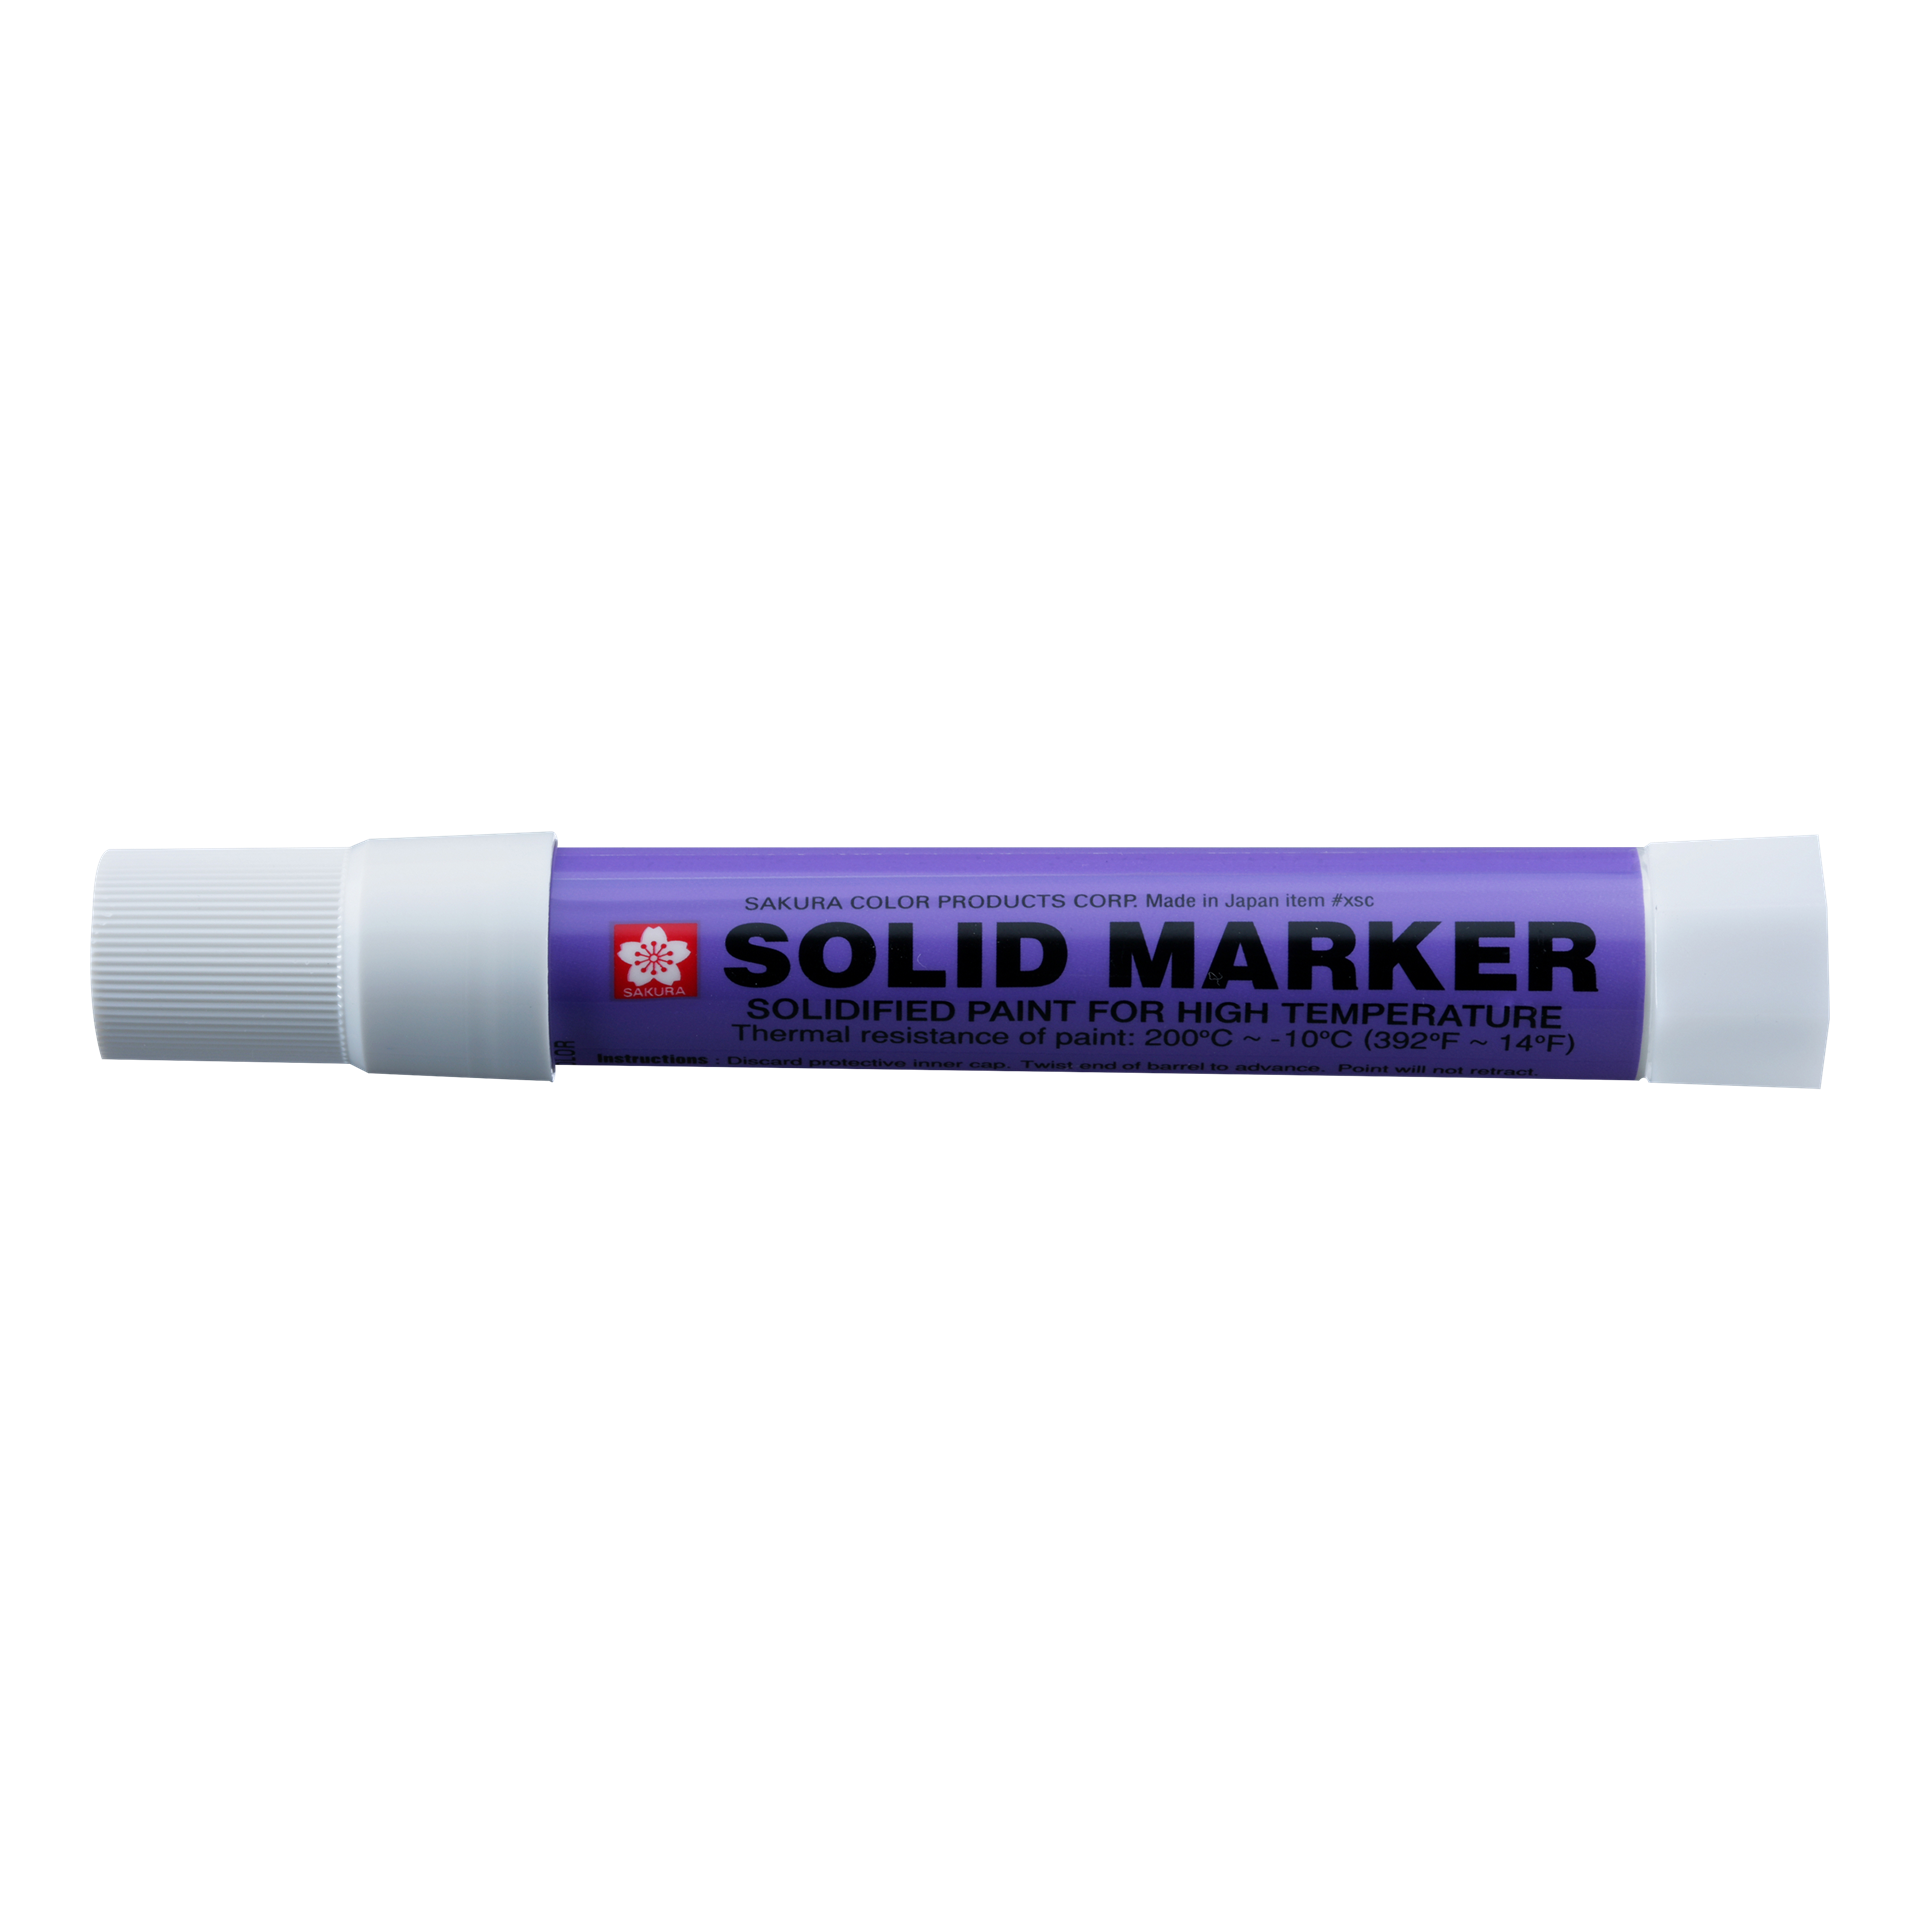 Sakura Solid Marker - White